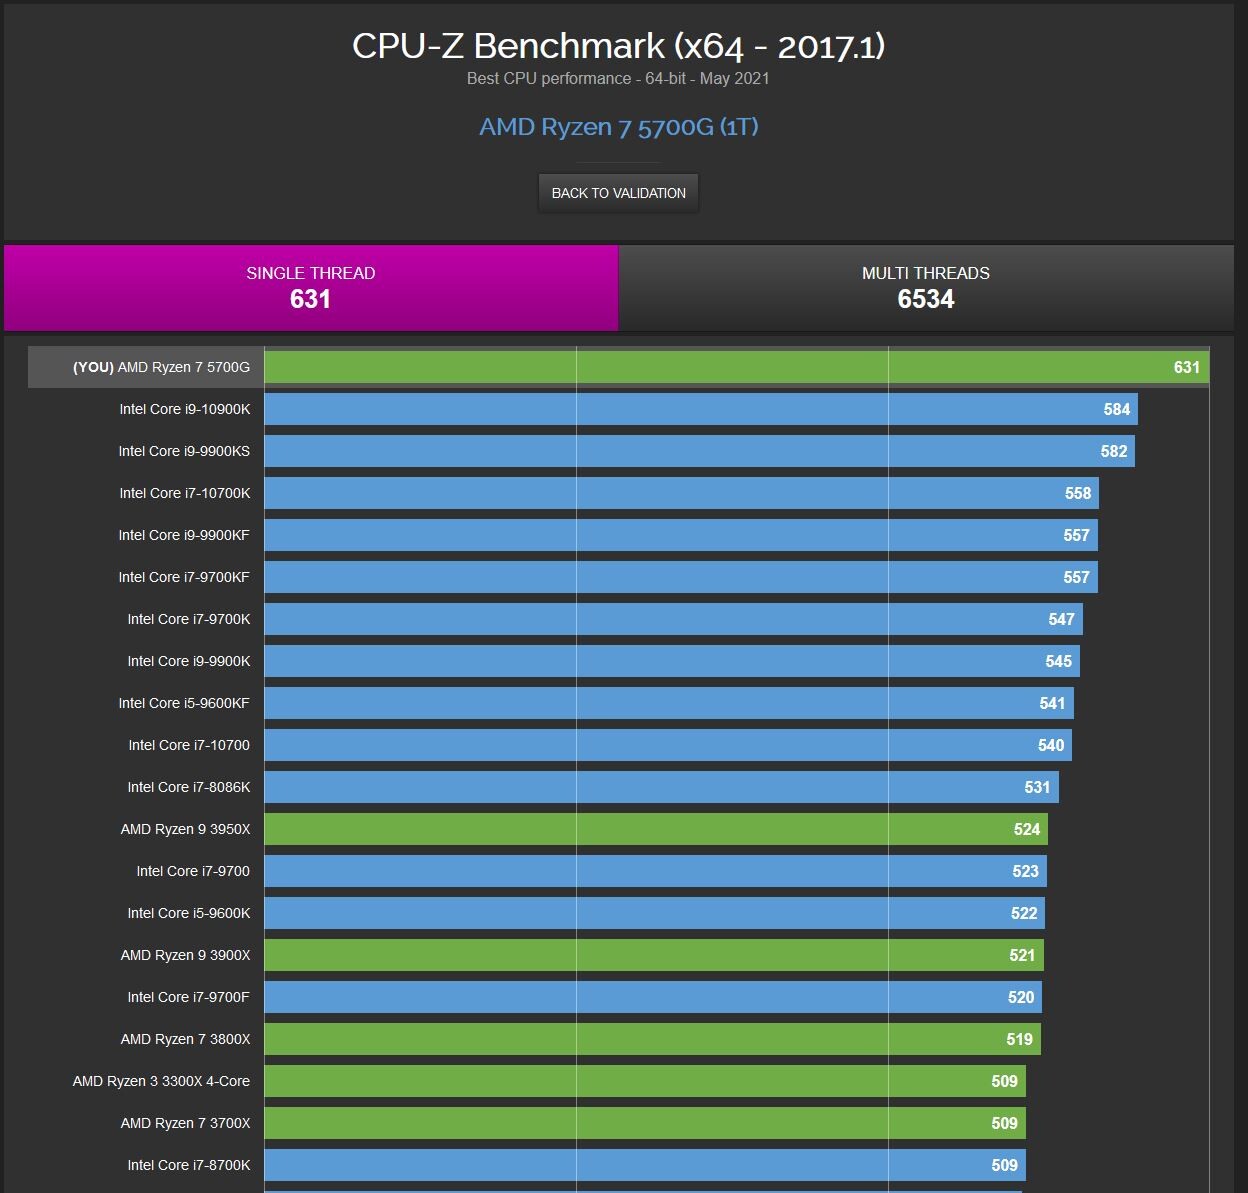 AMD Ryzen 7 5700G vs AMD Ryzen 5 5600G CPU Performance Comparison